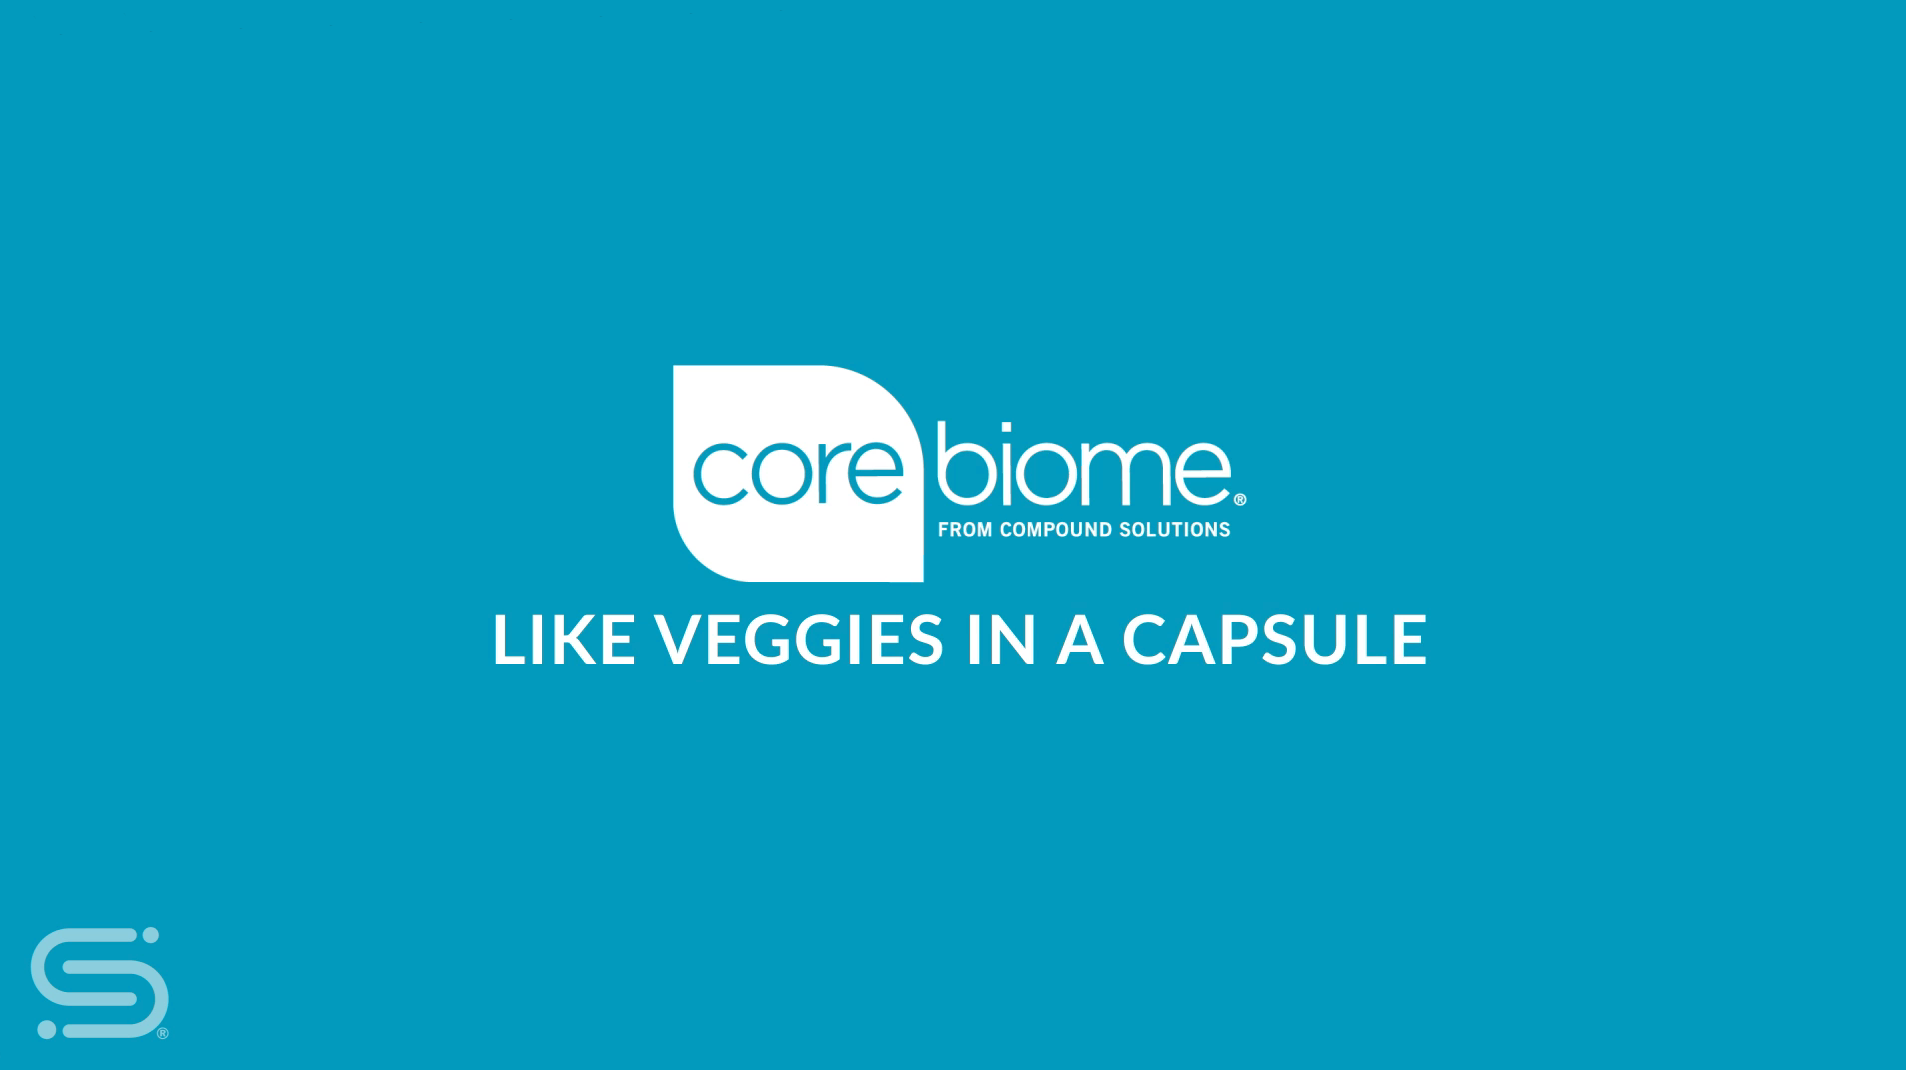 CoreBiome, like veggies in a capsule